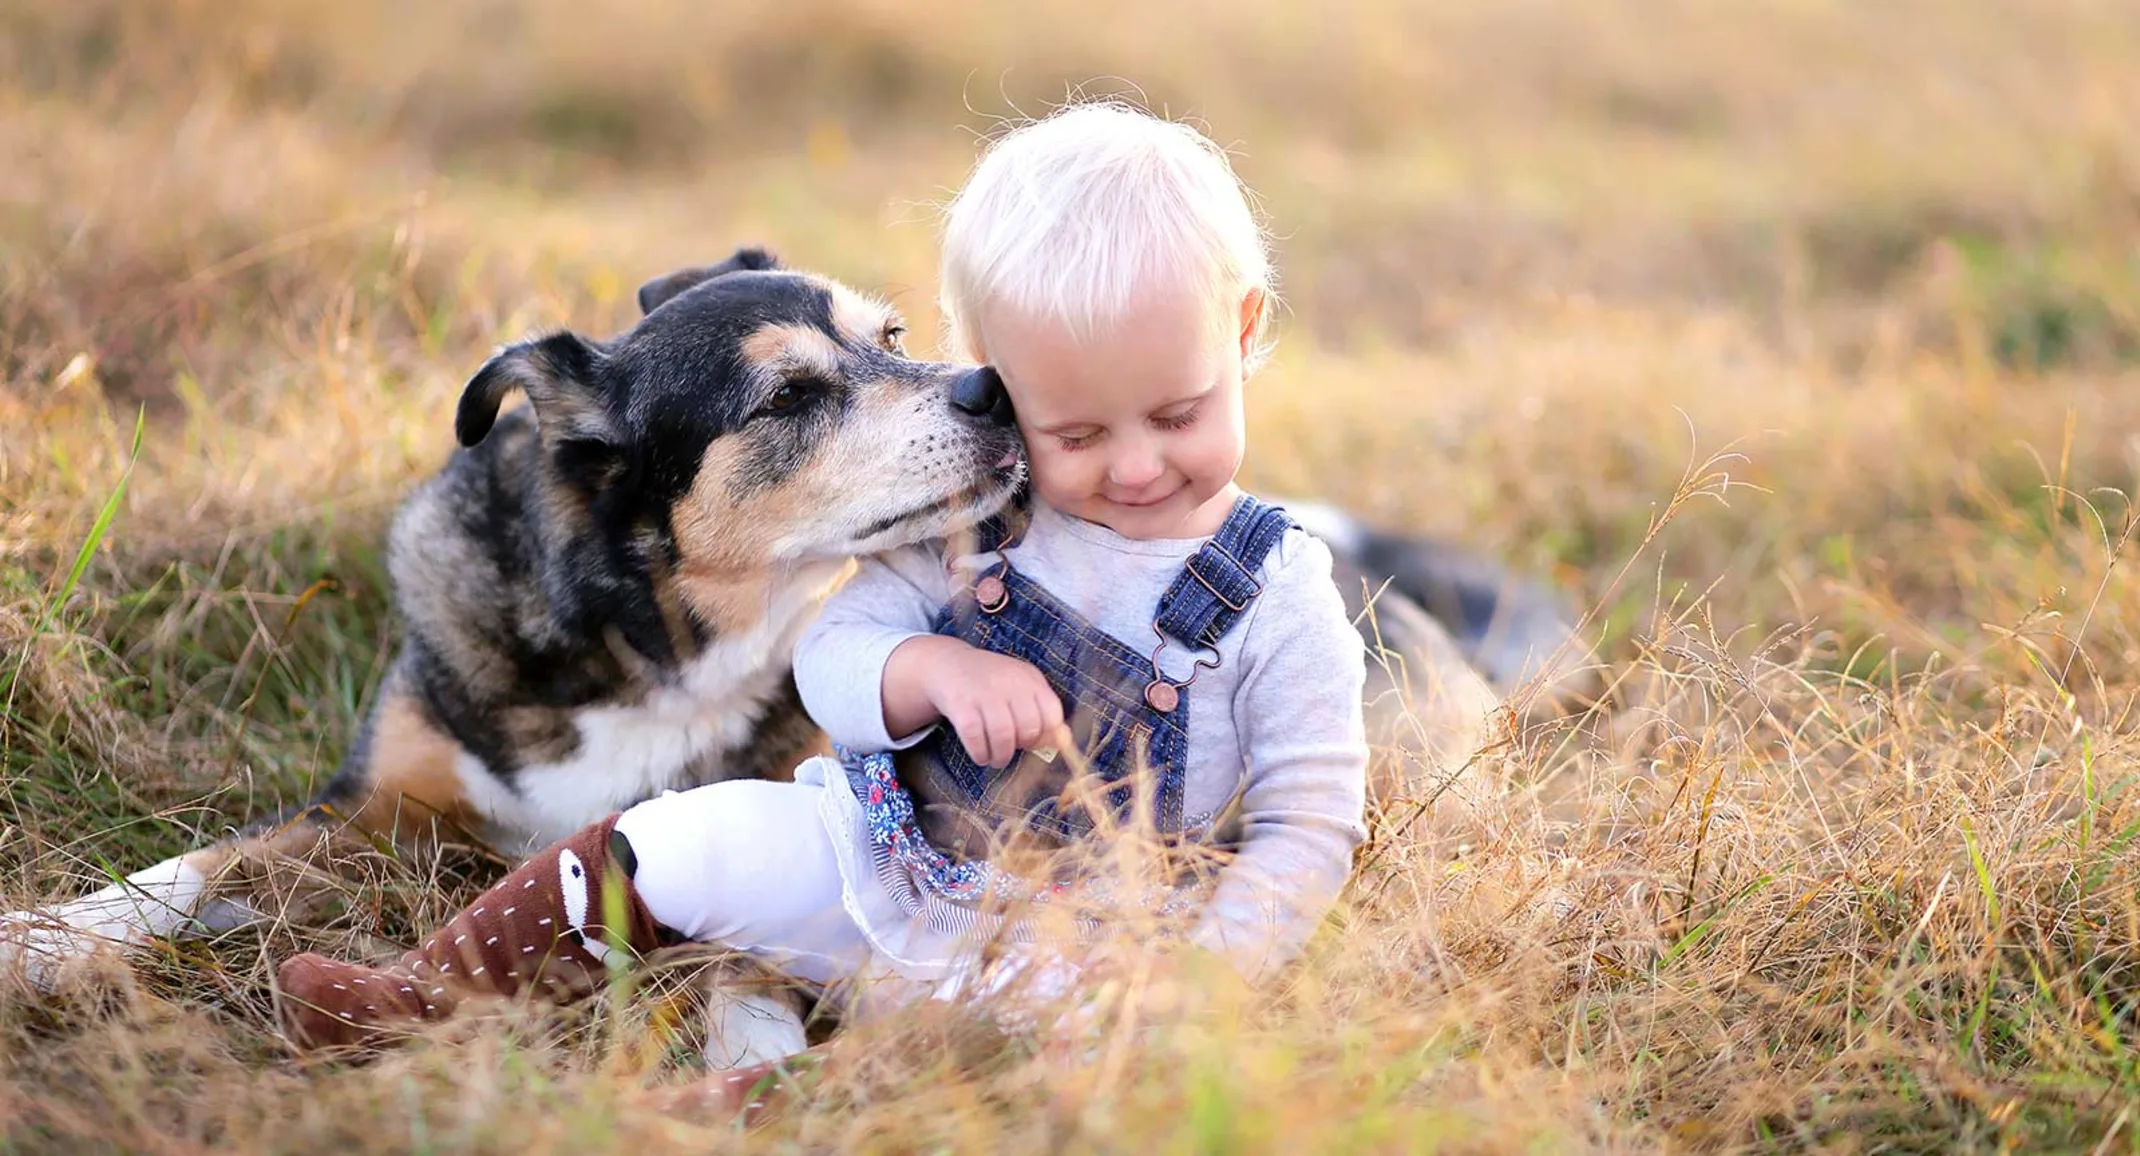  Dog licking kid in grass